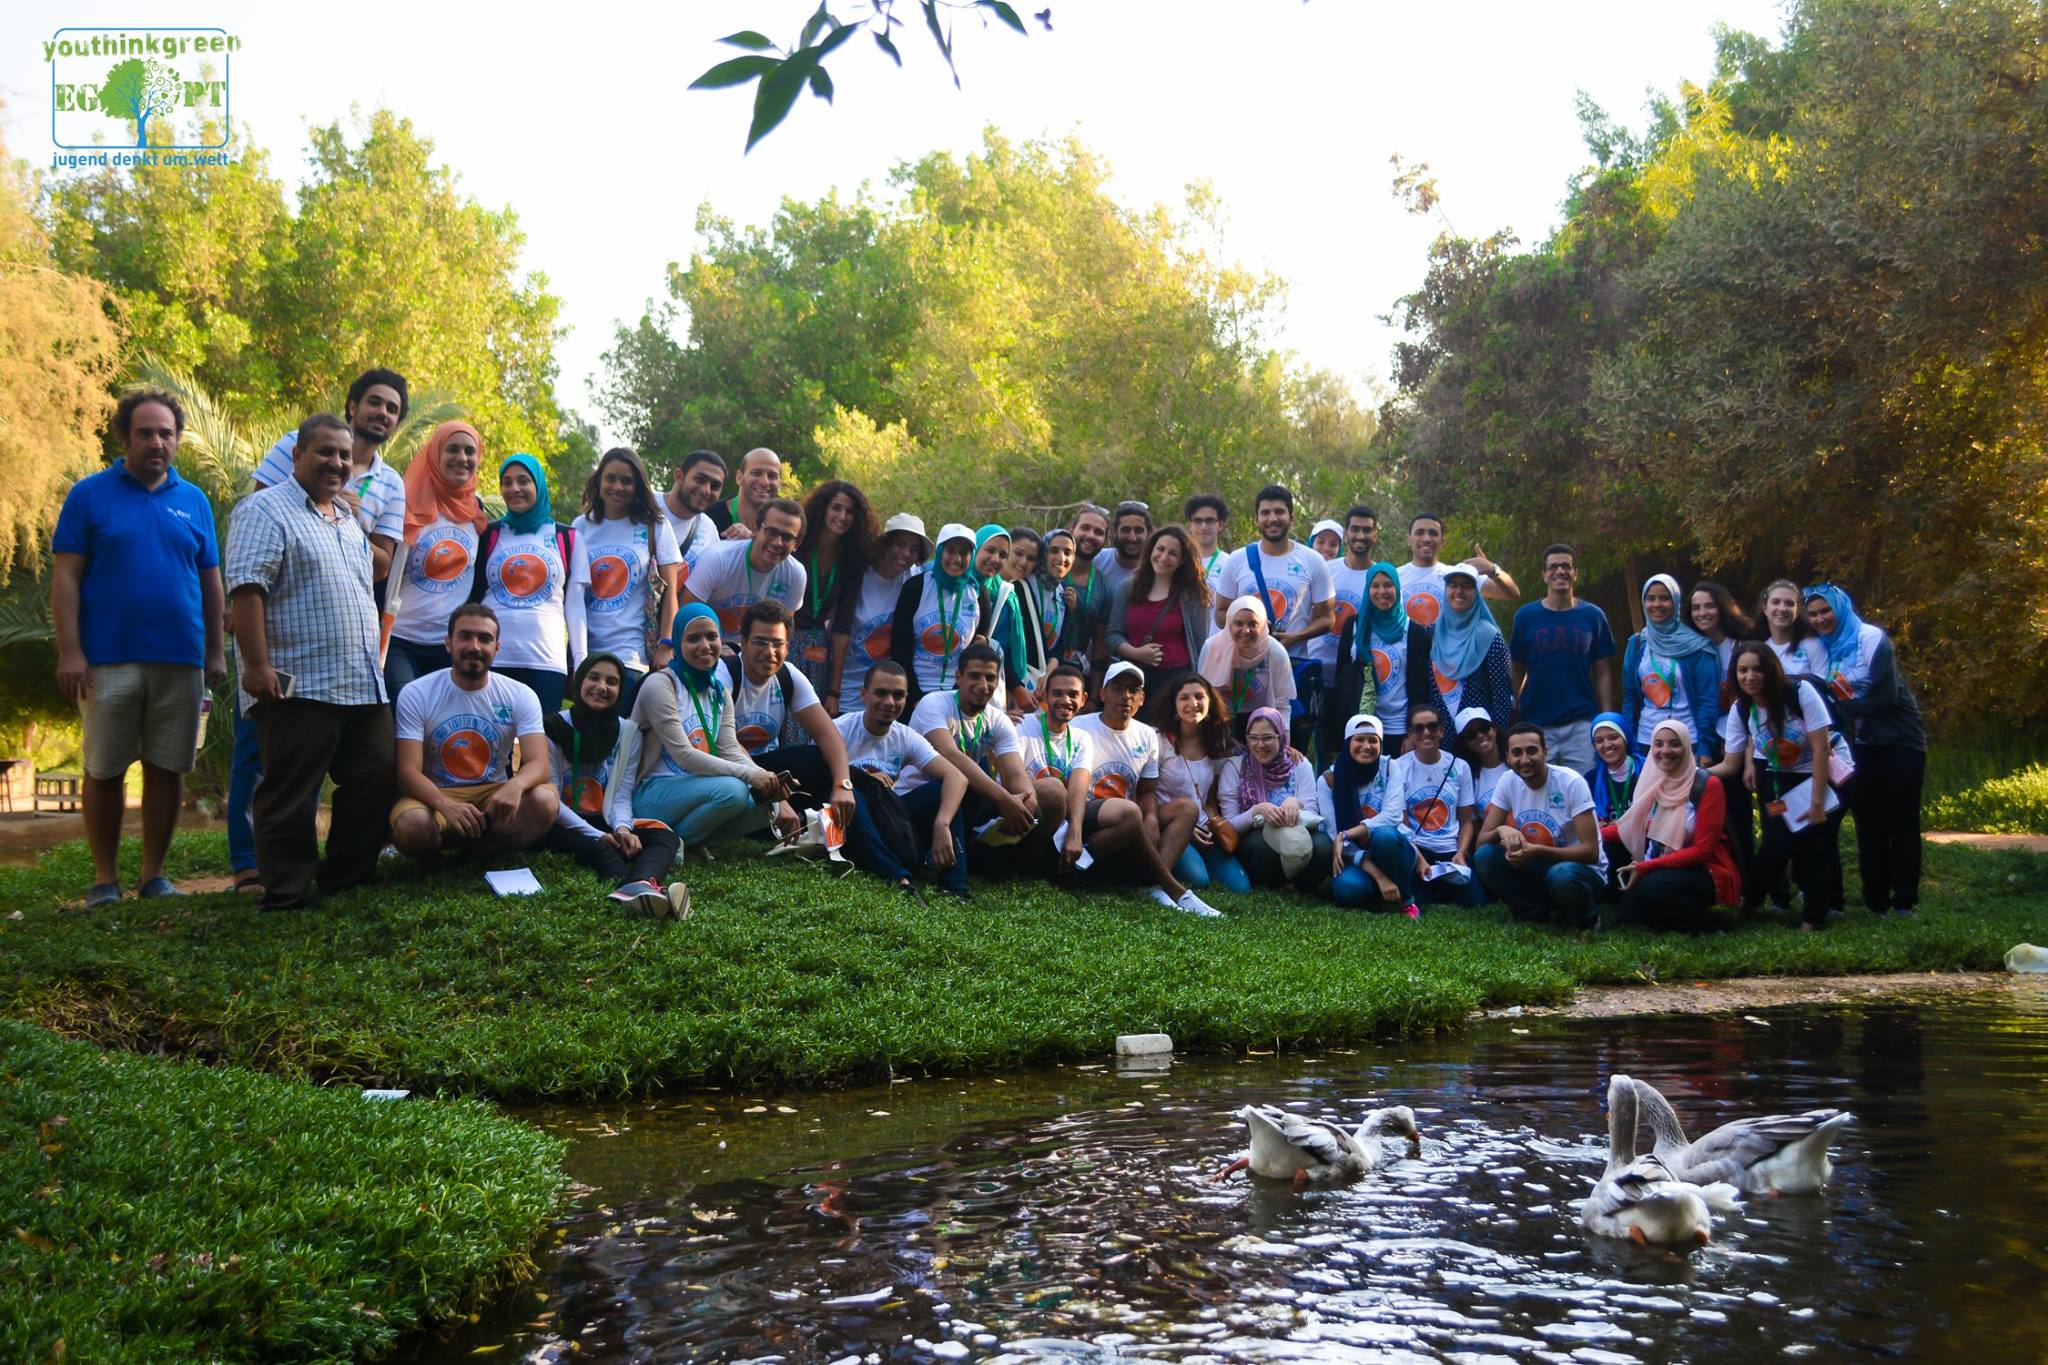 Youthinkgreen Egypt: مبادرة يقودها الشباب لتعزيز التنمية المستدامة والعمل المناخي